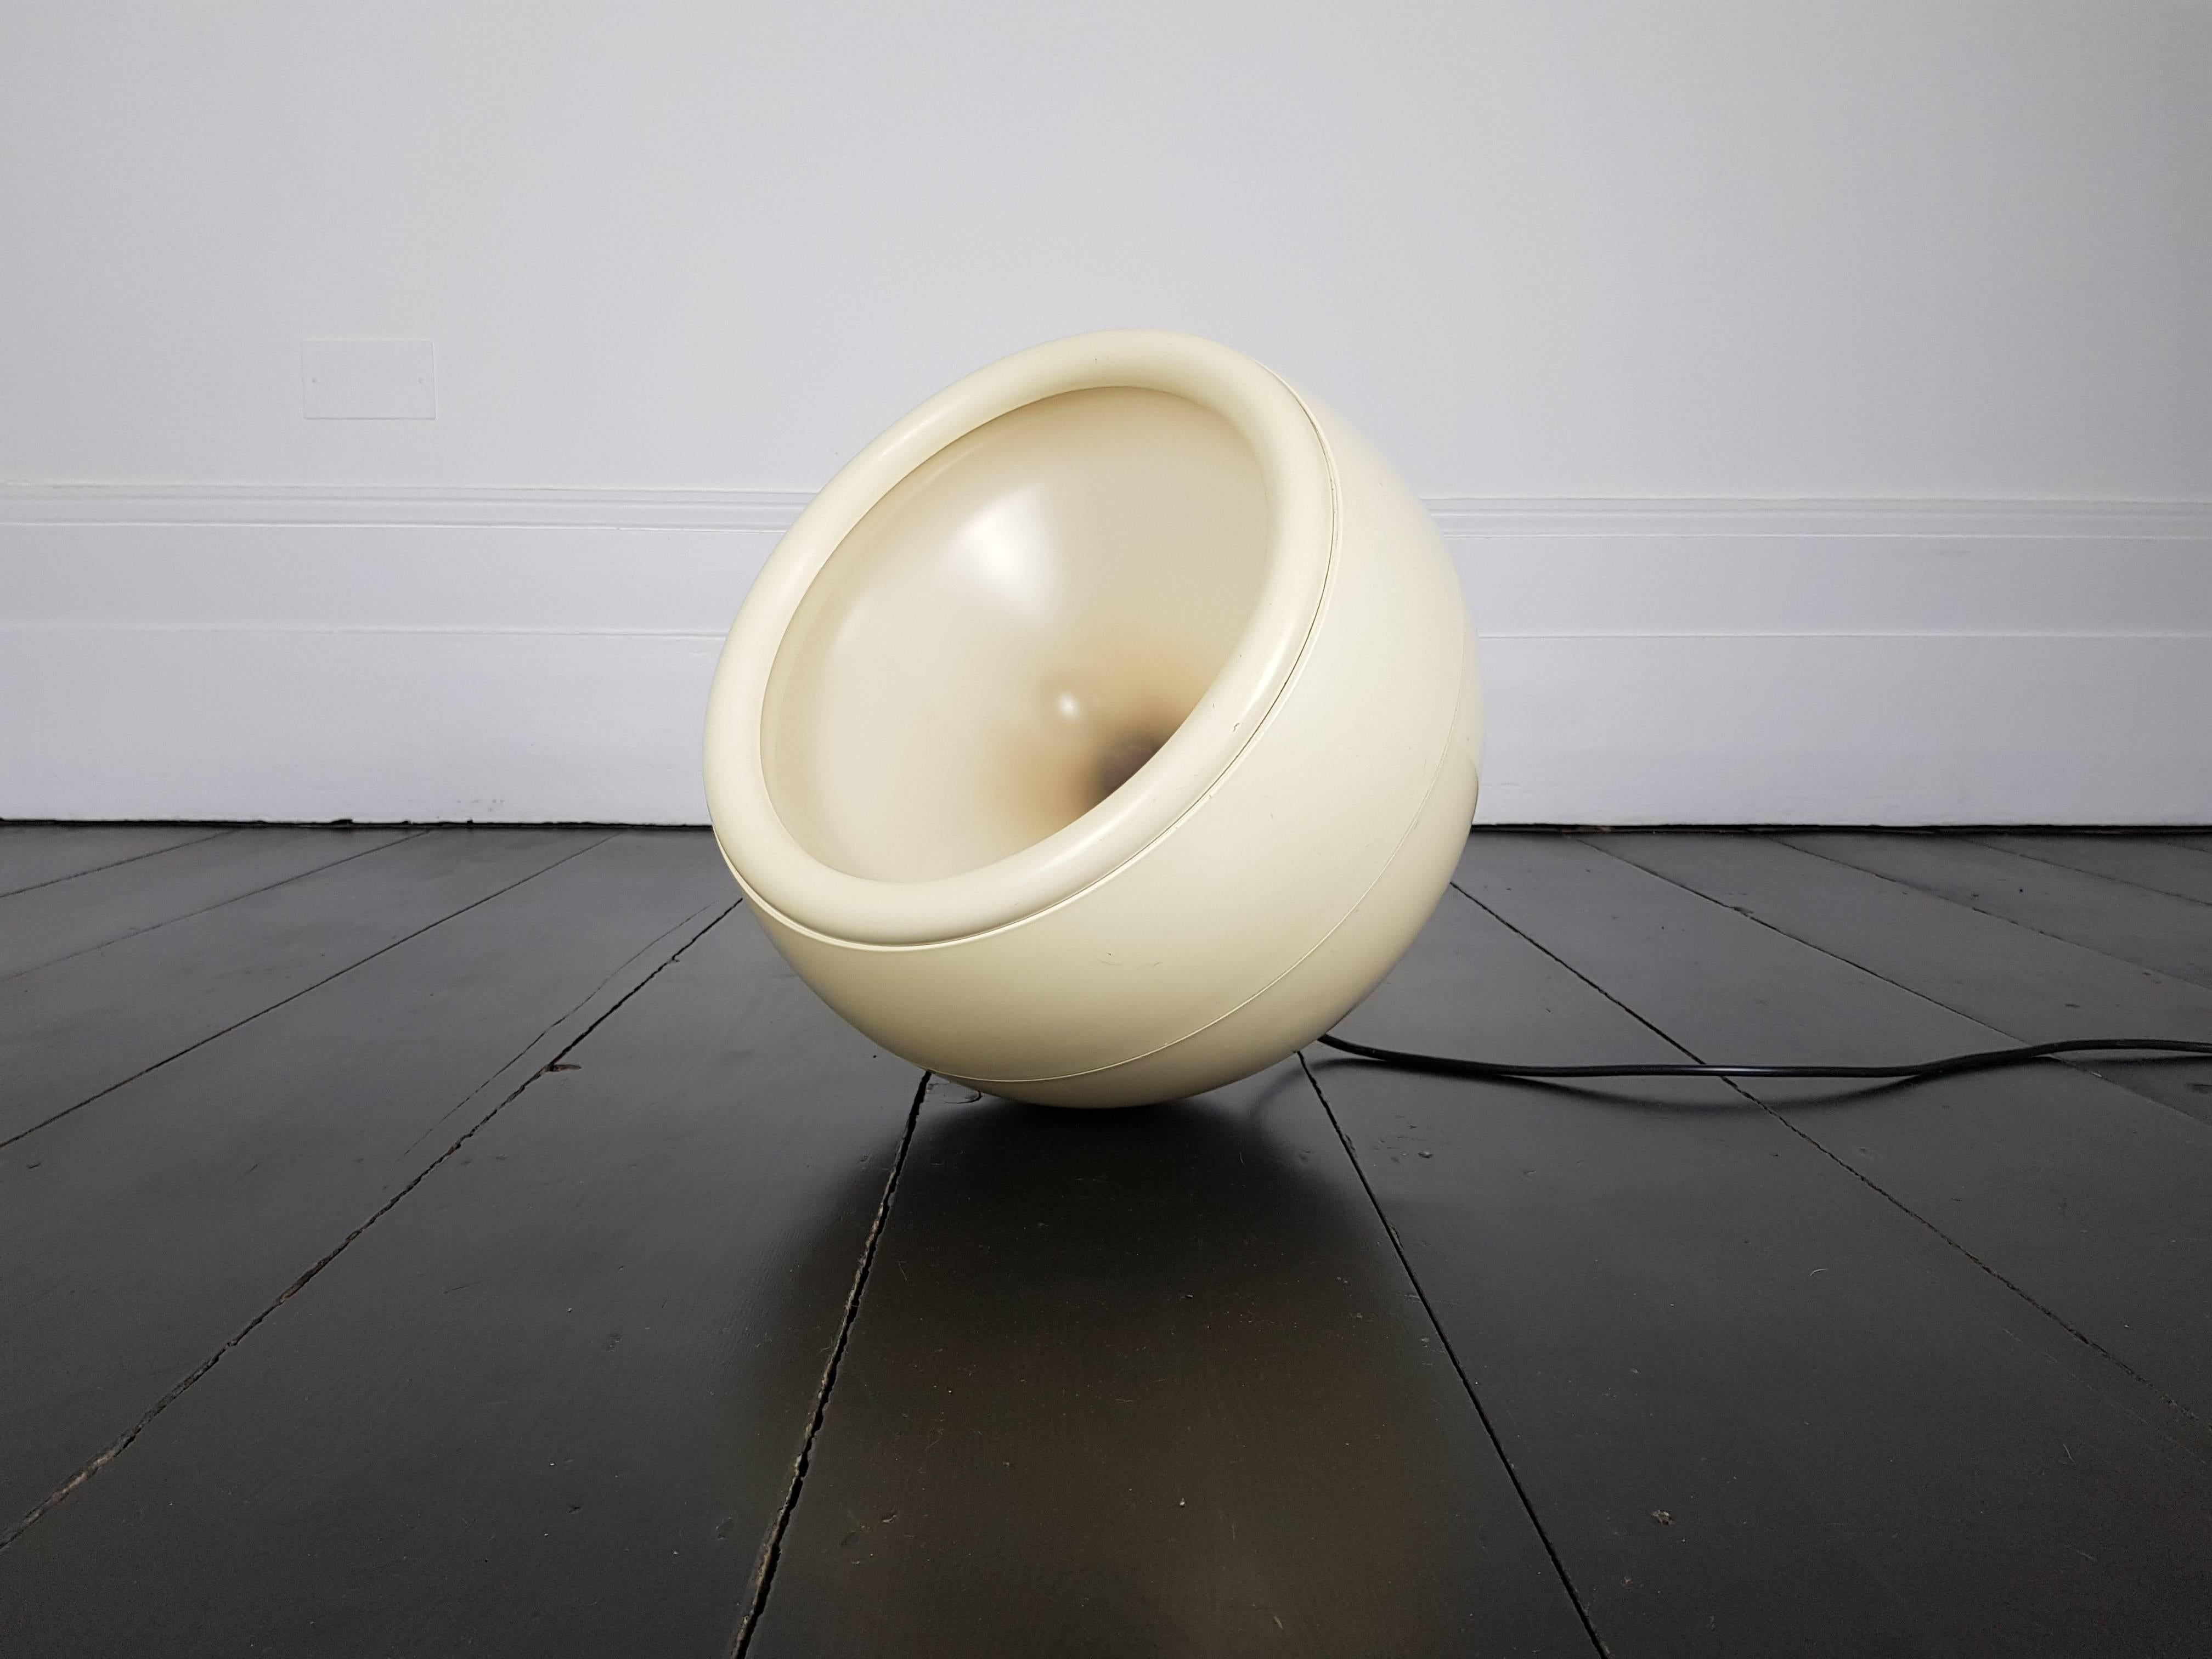 20th Century 'Pallade' Floor Lamp by Studio Tetrarch for Artemide, Designed in 1968